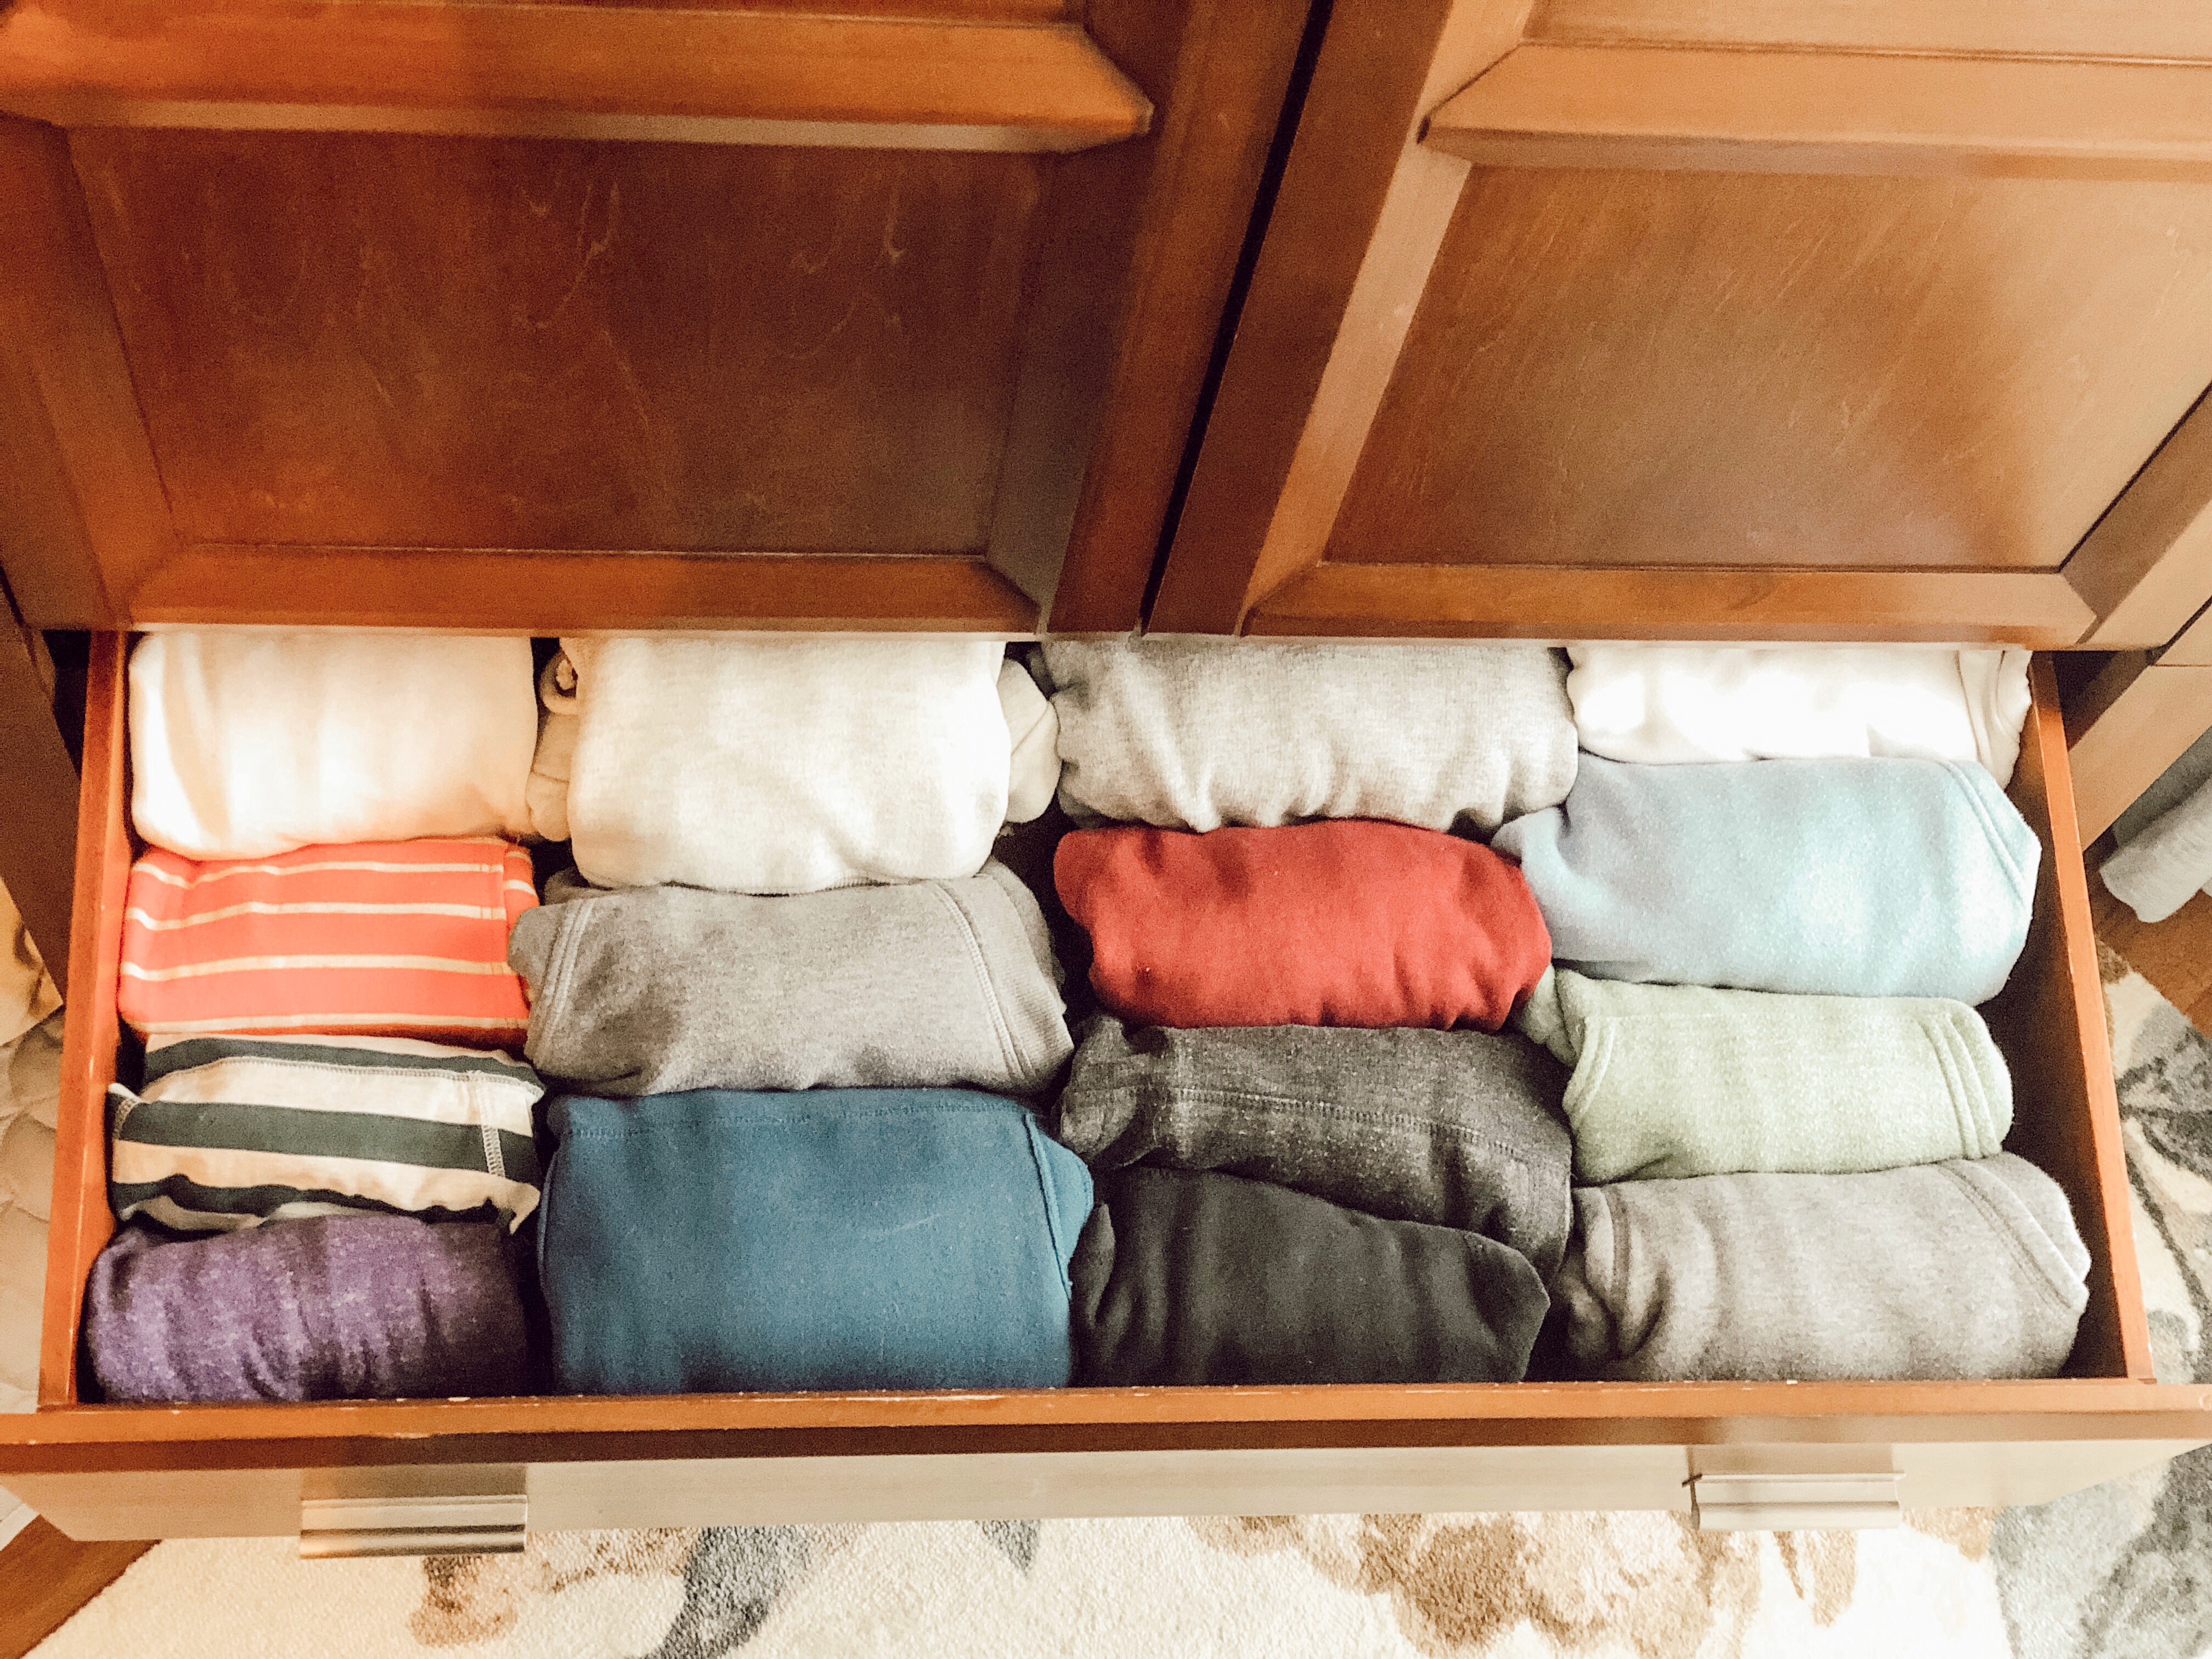 Marie Kondo sweater drawer folding